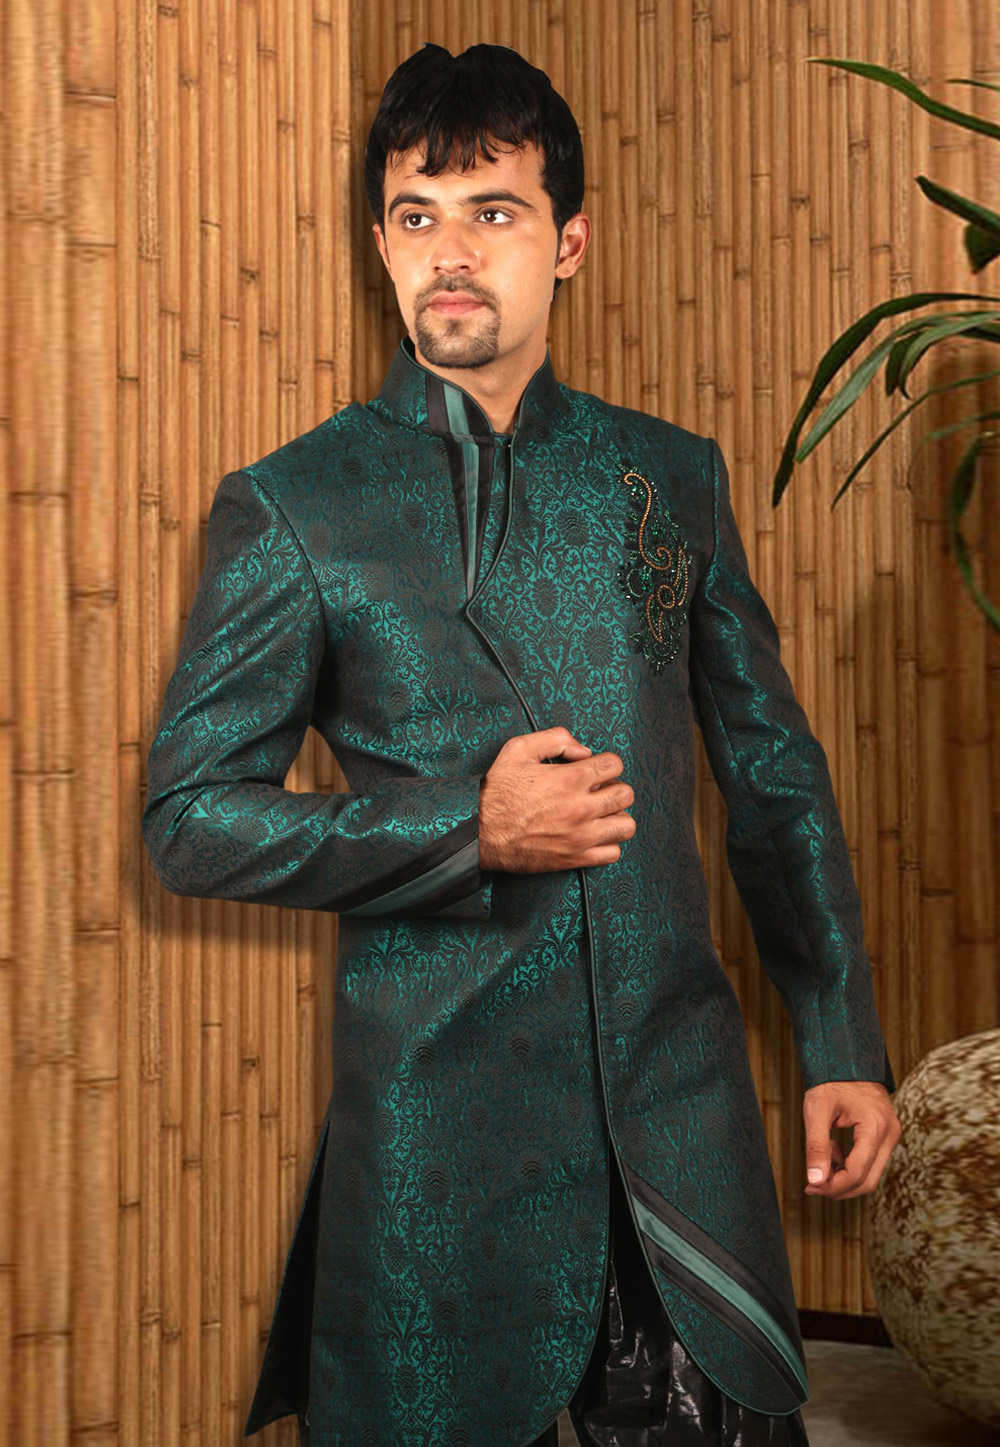 Mens Designer Jodhpuri Suit,Party Wear Jodhpuri Suit,Mens Jodhpuri Suit,Wedding  Jodhpuri Suit,Indian Designer Jodhpuri Suit,Jodhpuri Suit For Mens,Mens  Suits or Wedding